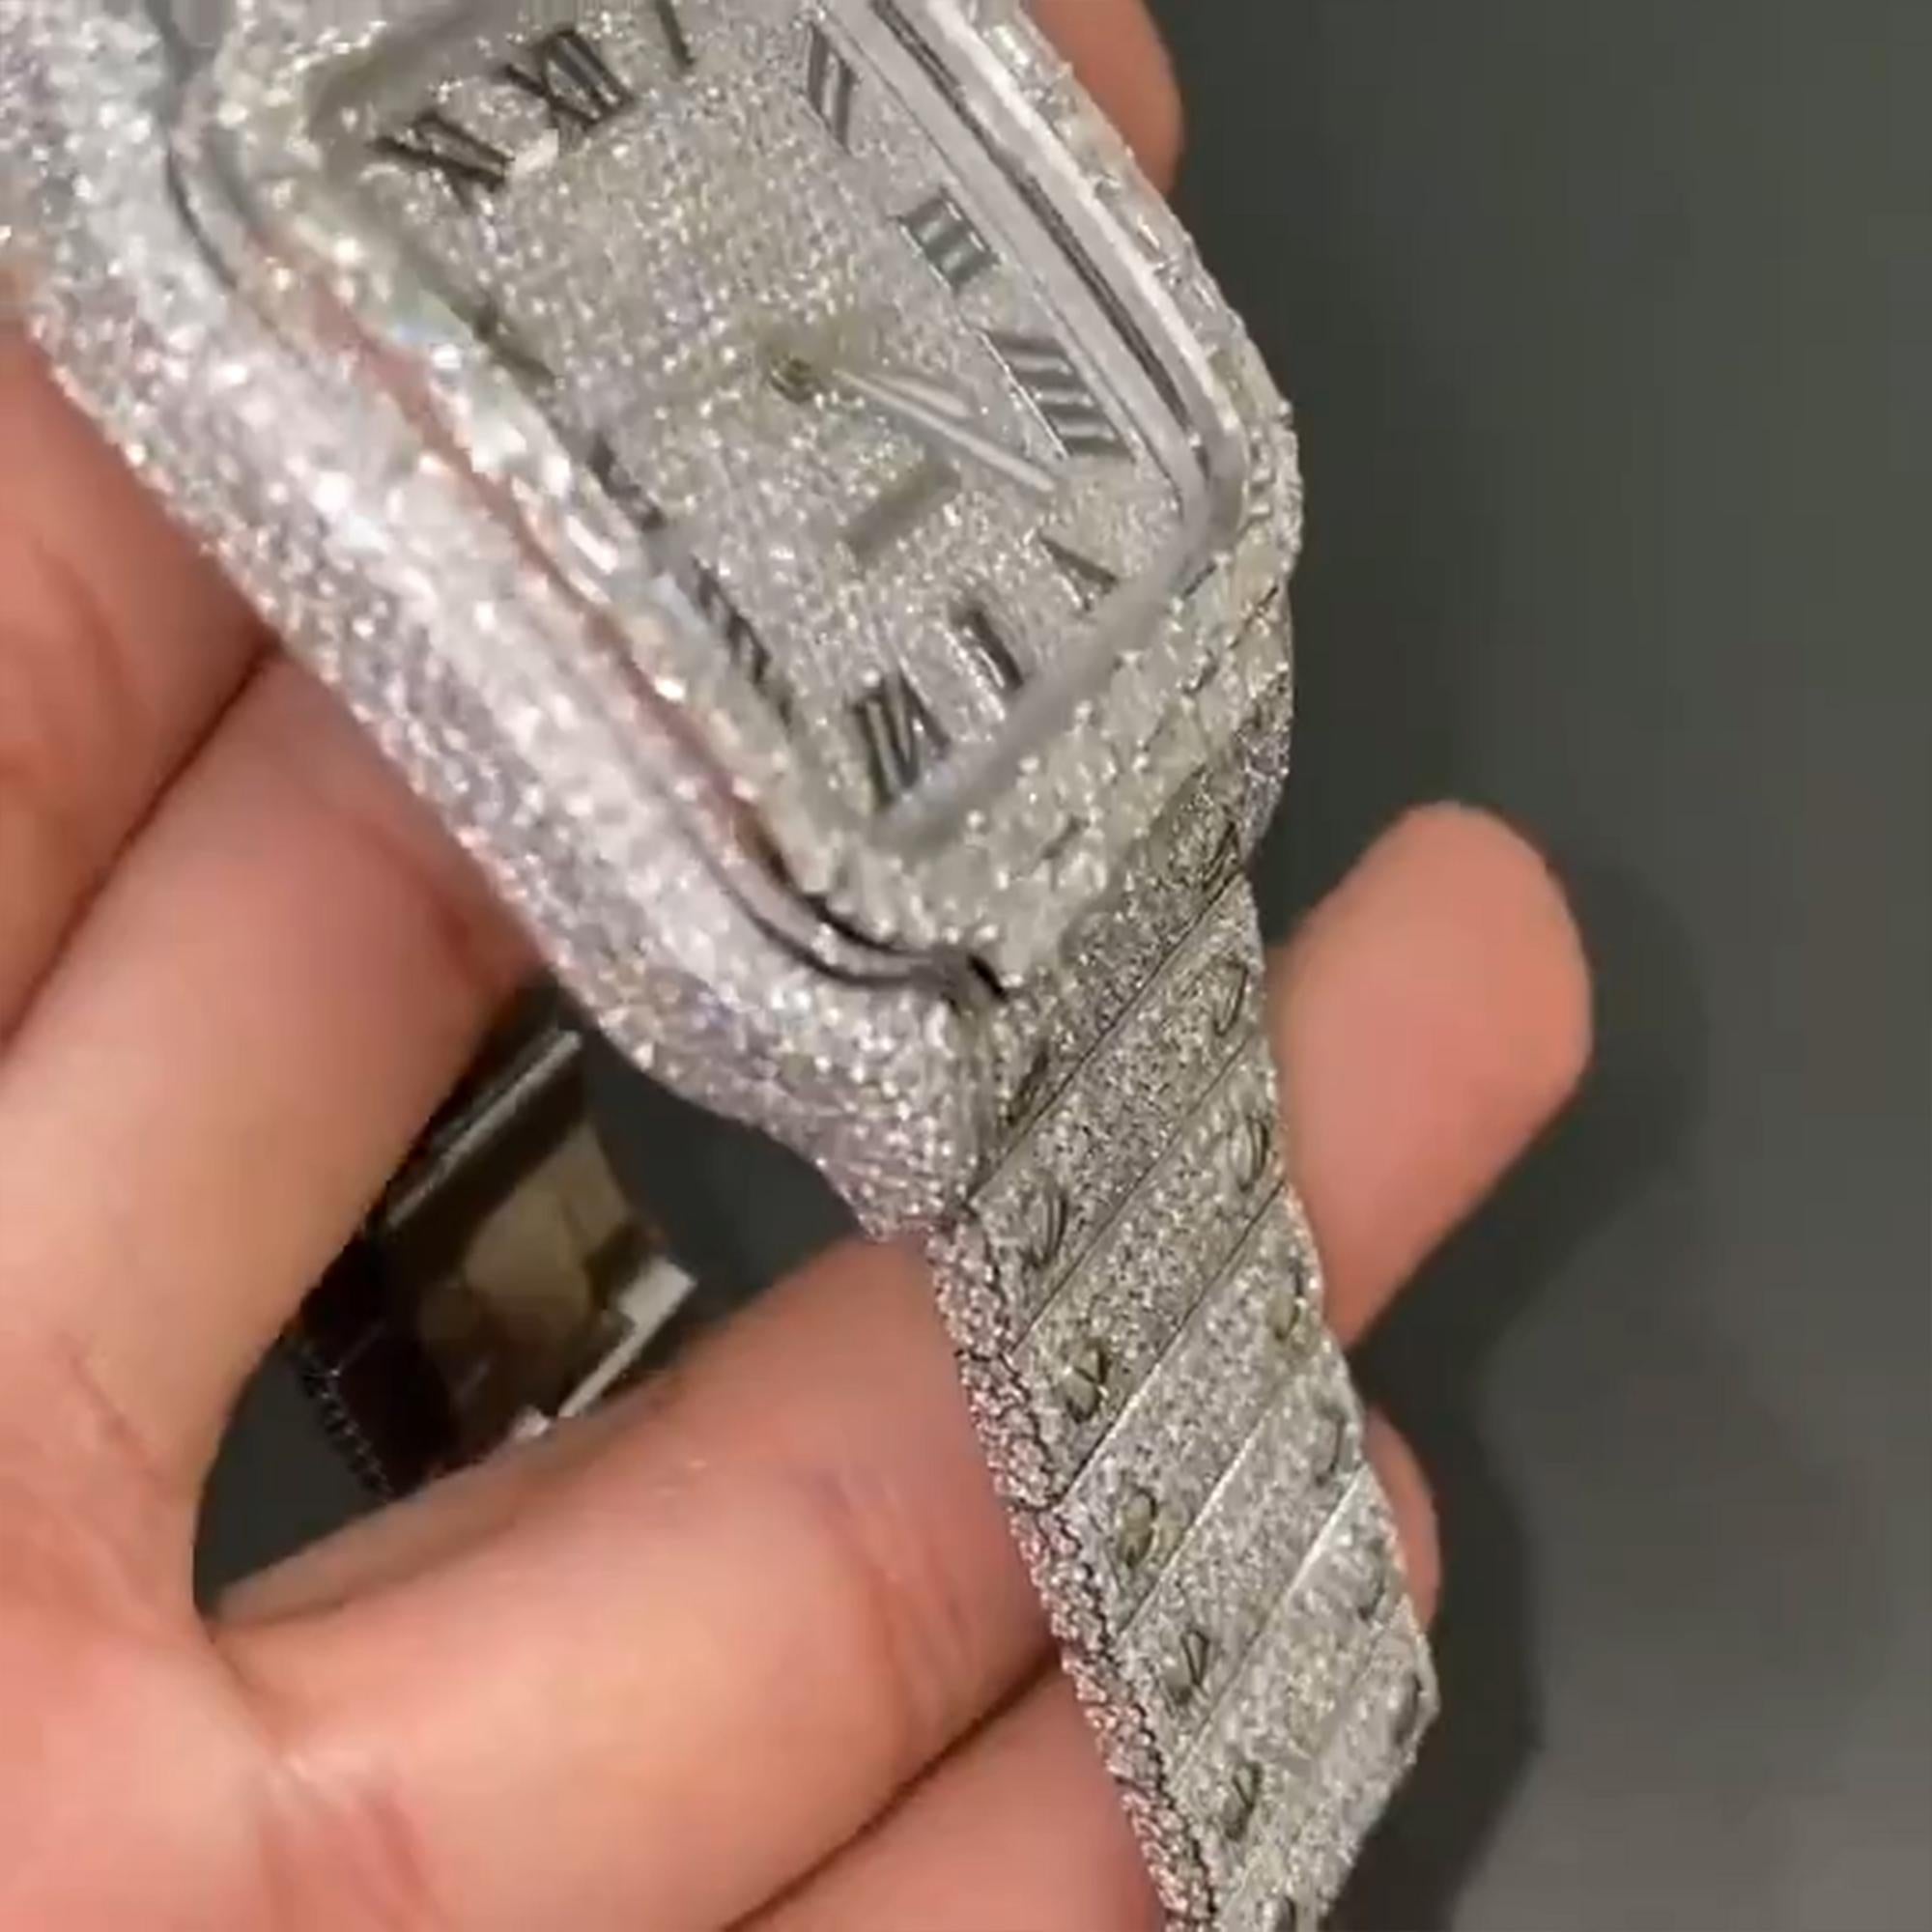 Cartier Santos Moissanite Diamond Watch w 27